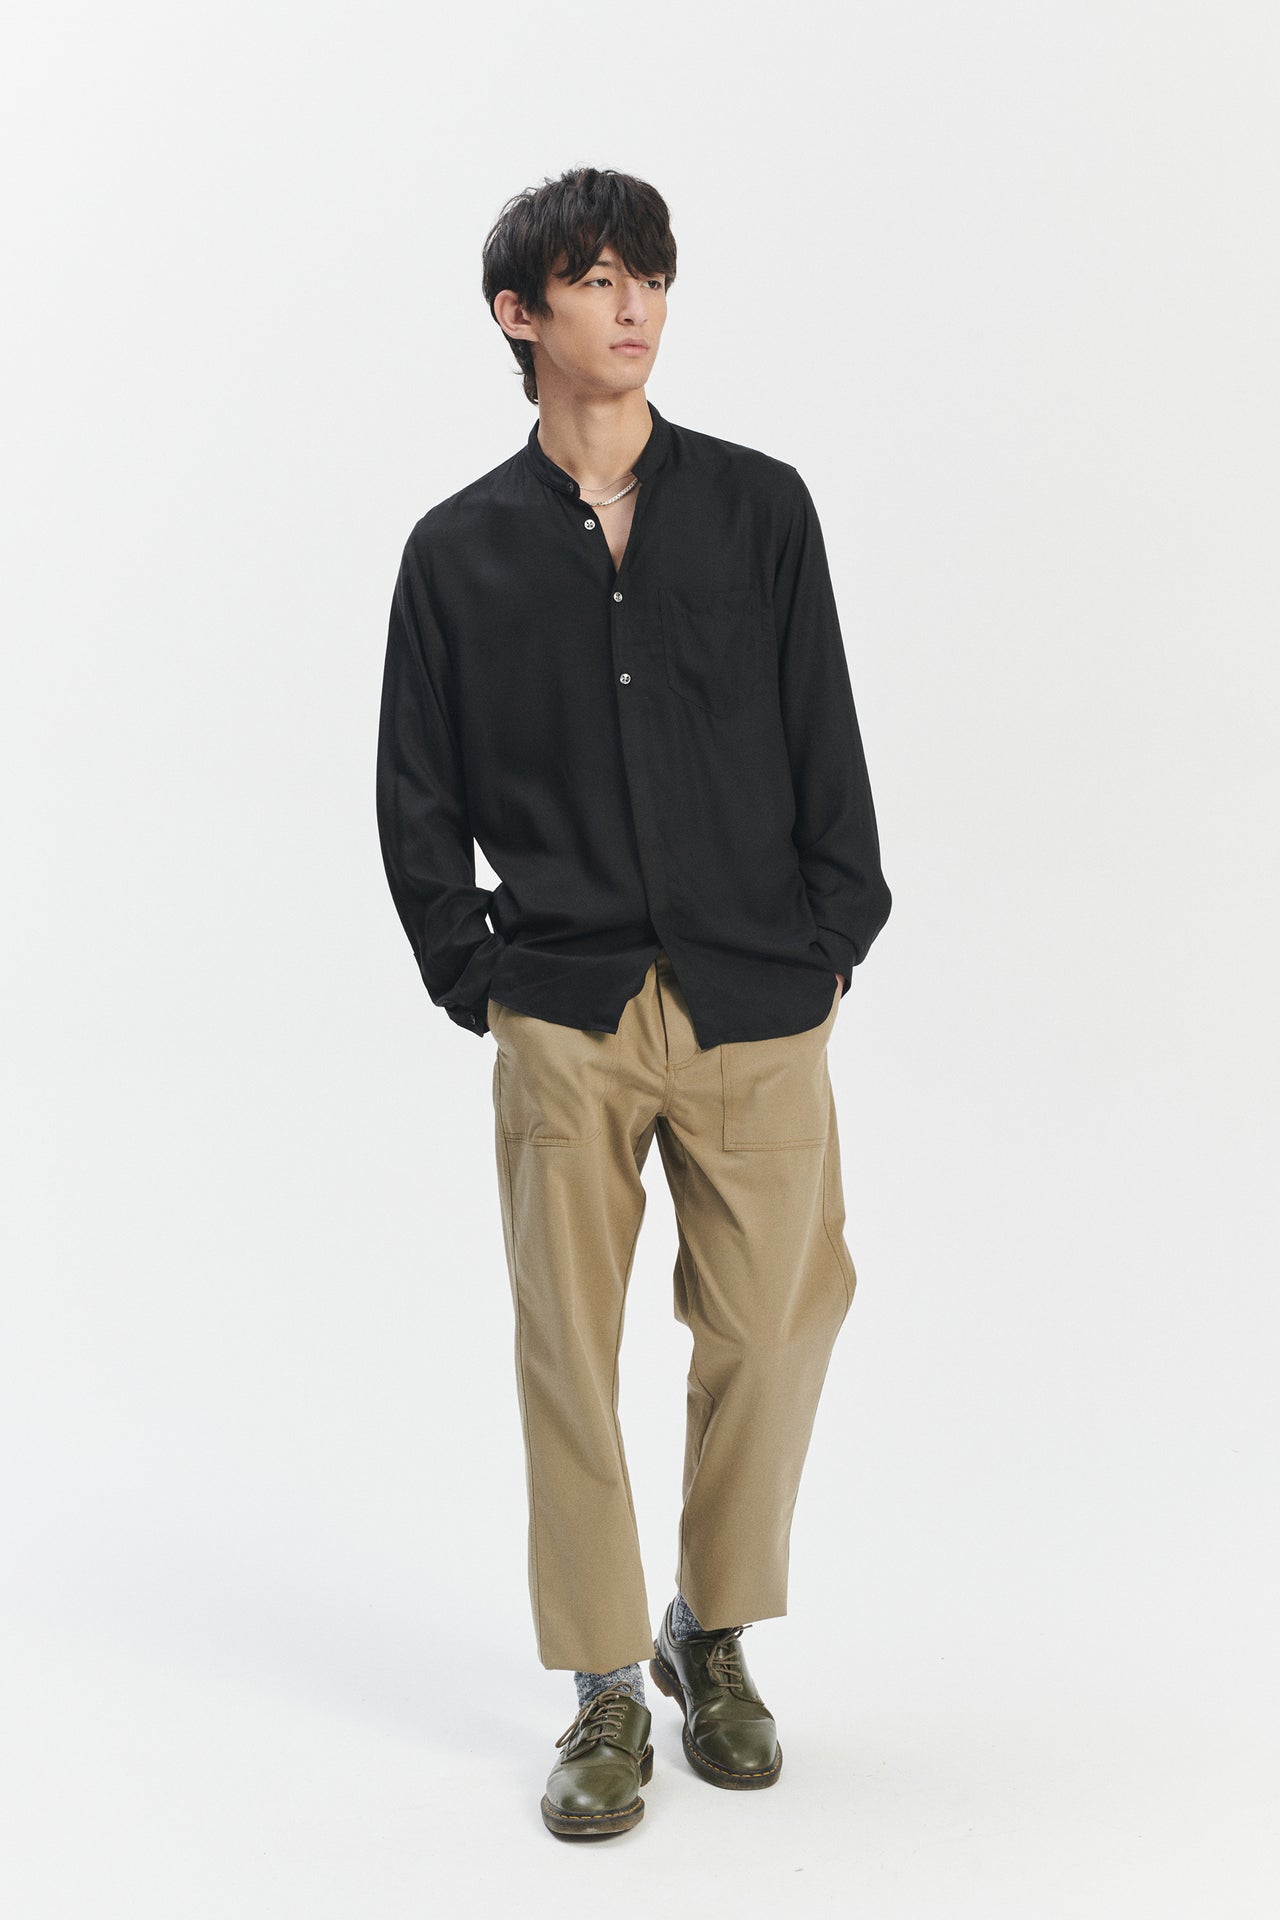 Zen Grandad Collar Shirt in the Finest Black Italian Modal